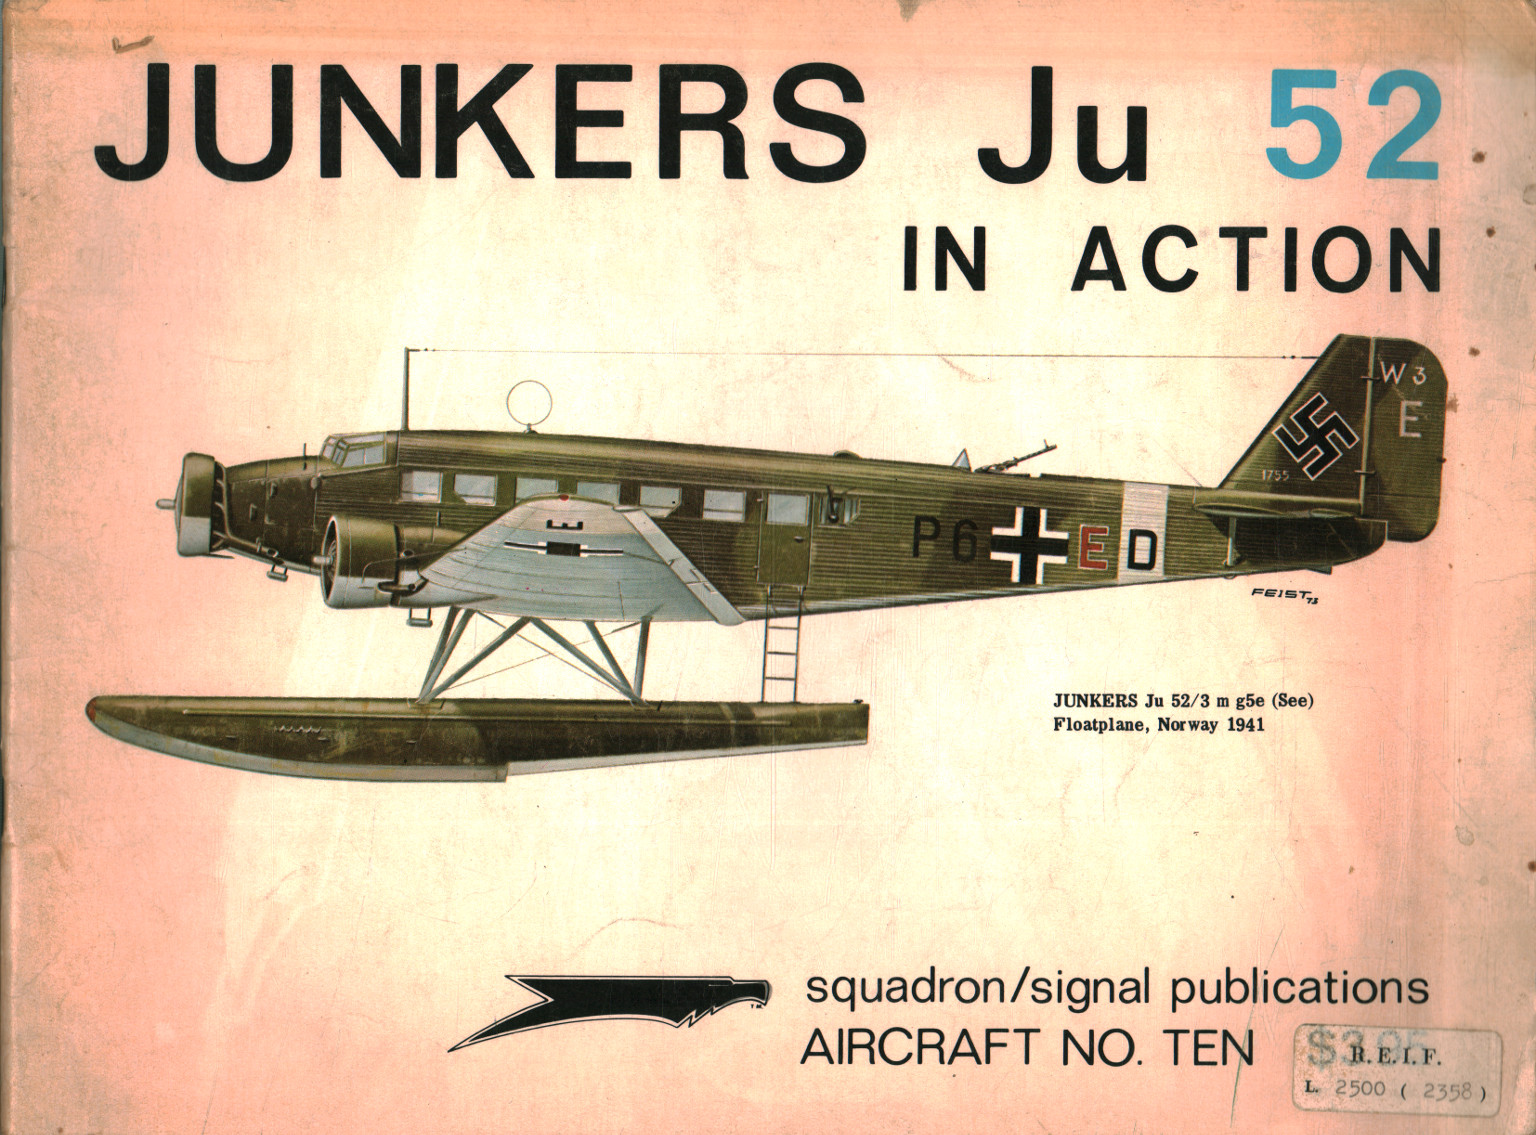 Junkers JU 52 in action